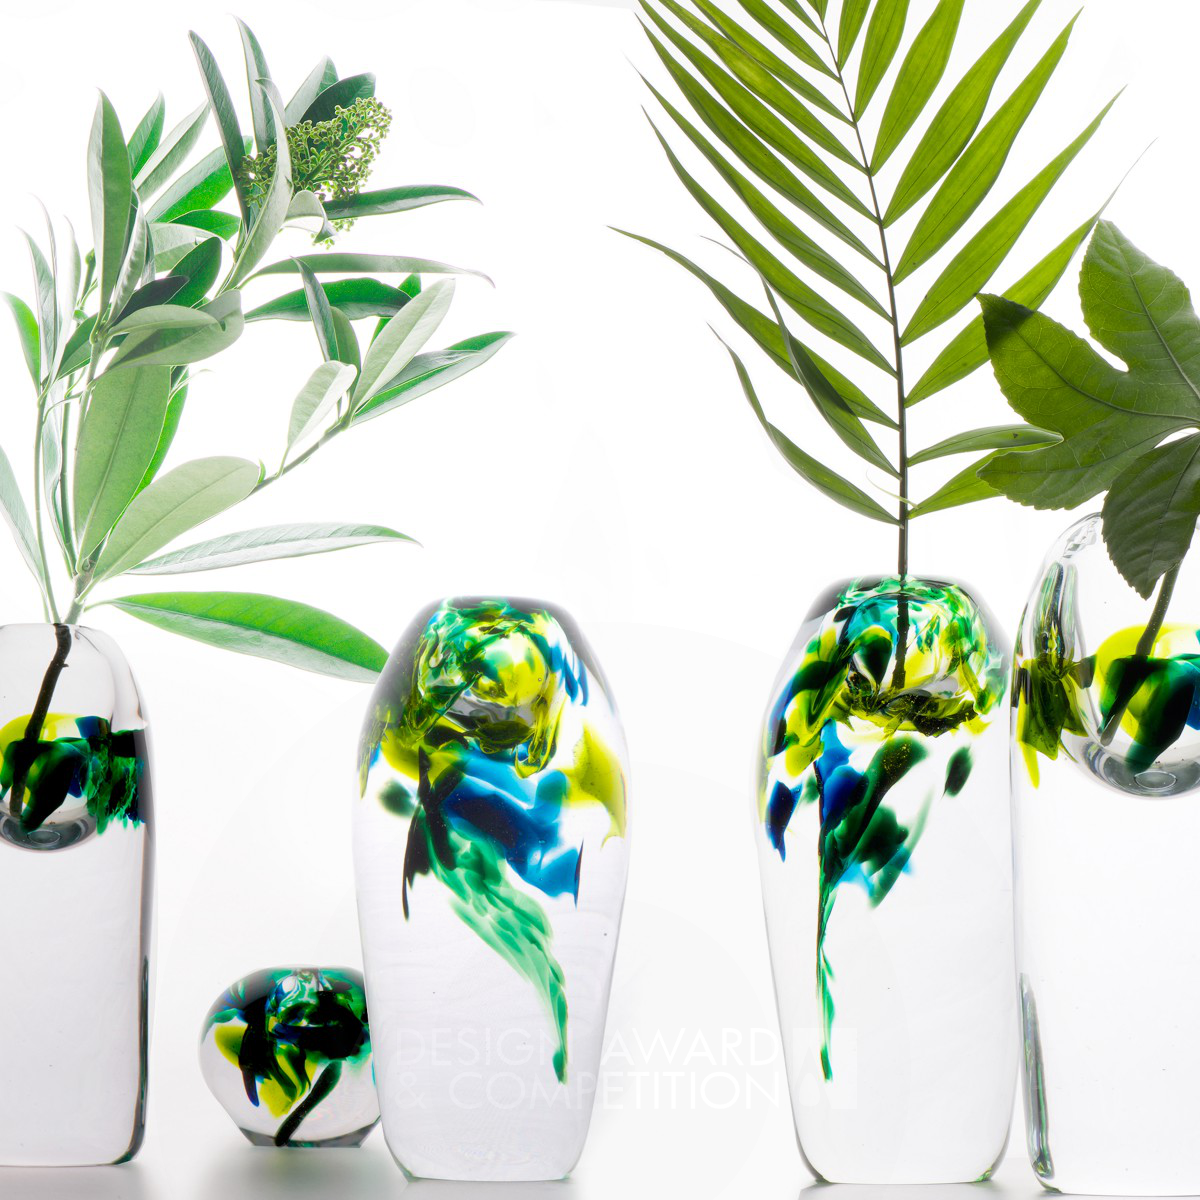 Rainforest Vase by Sini Majuri Silver Furniture Design Award Winner 2020 